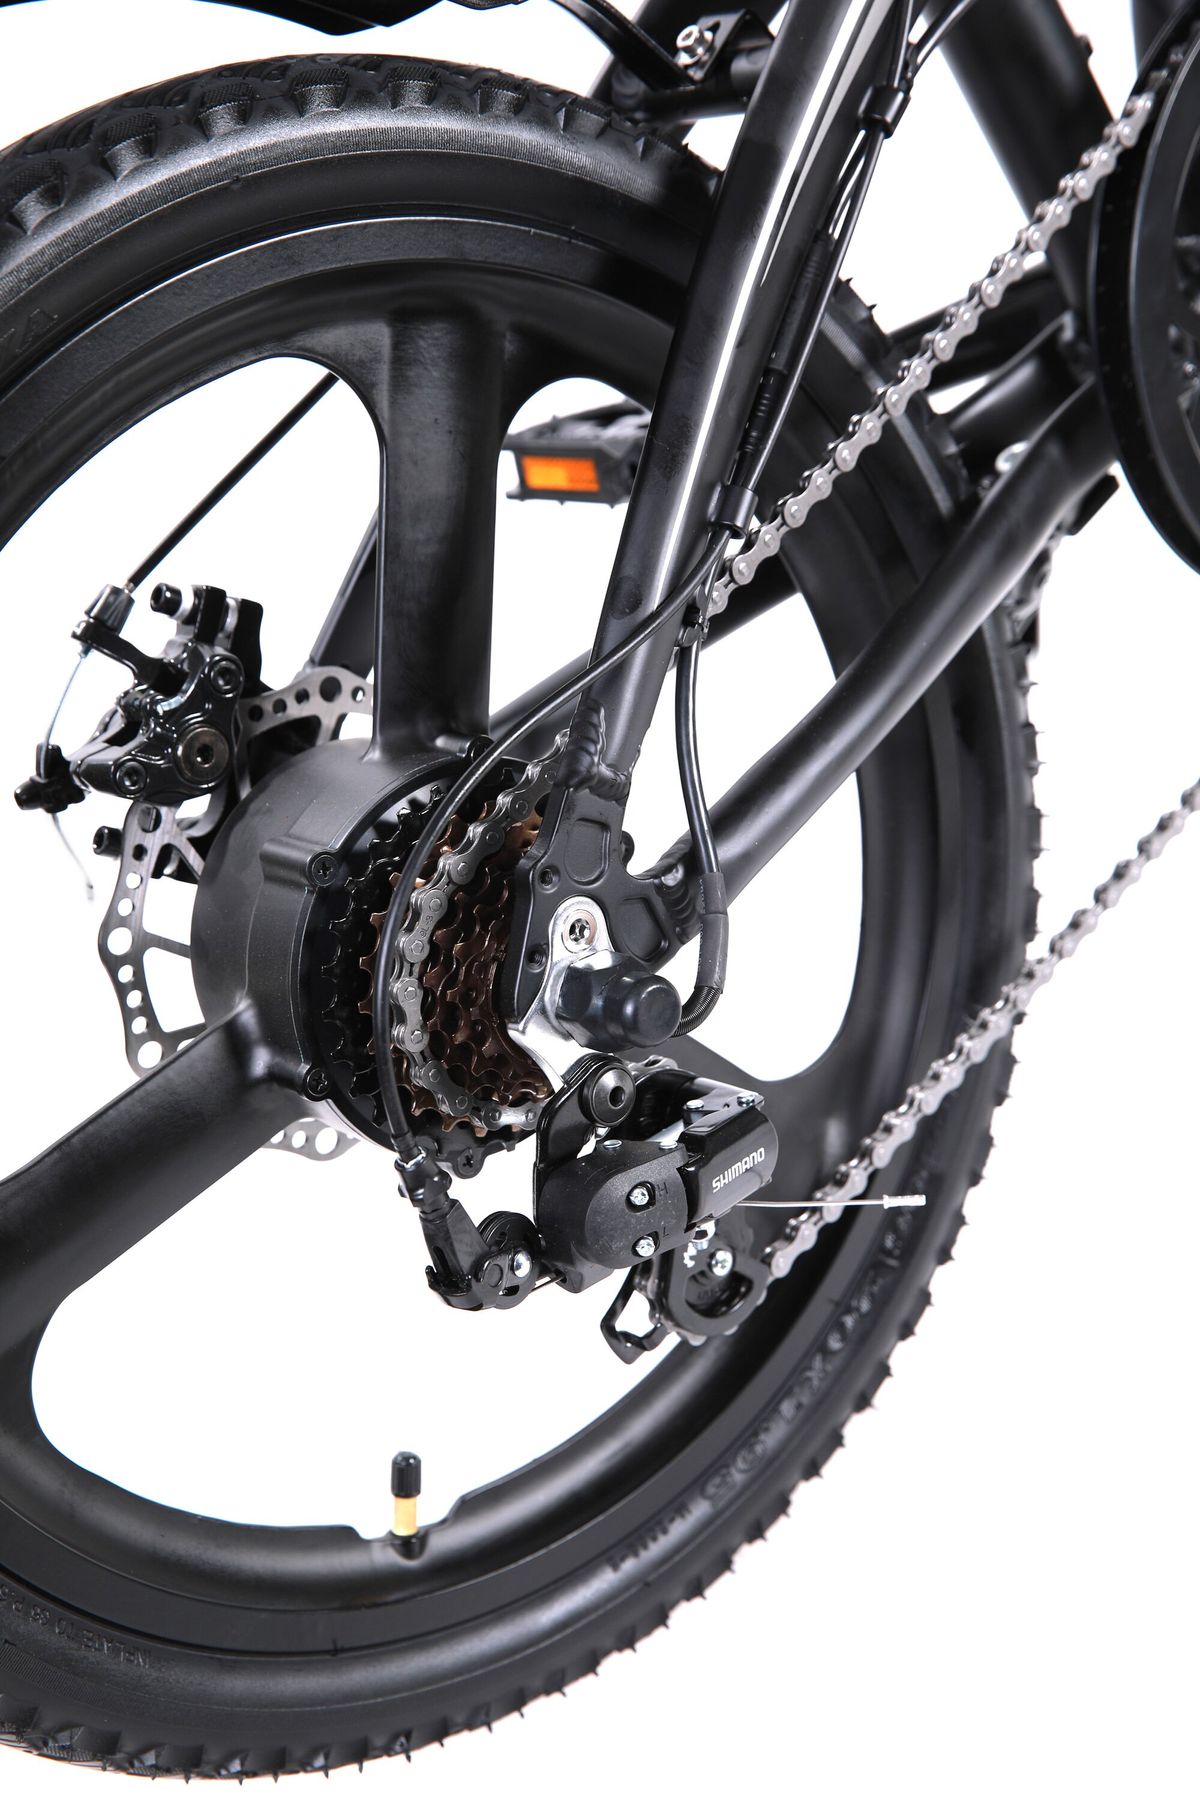 Електровелосипед Tailg Cool Time Black